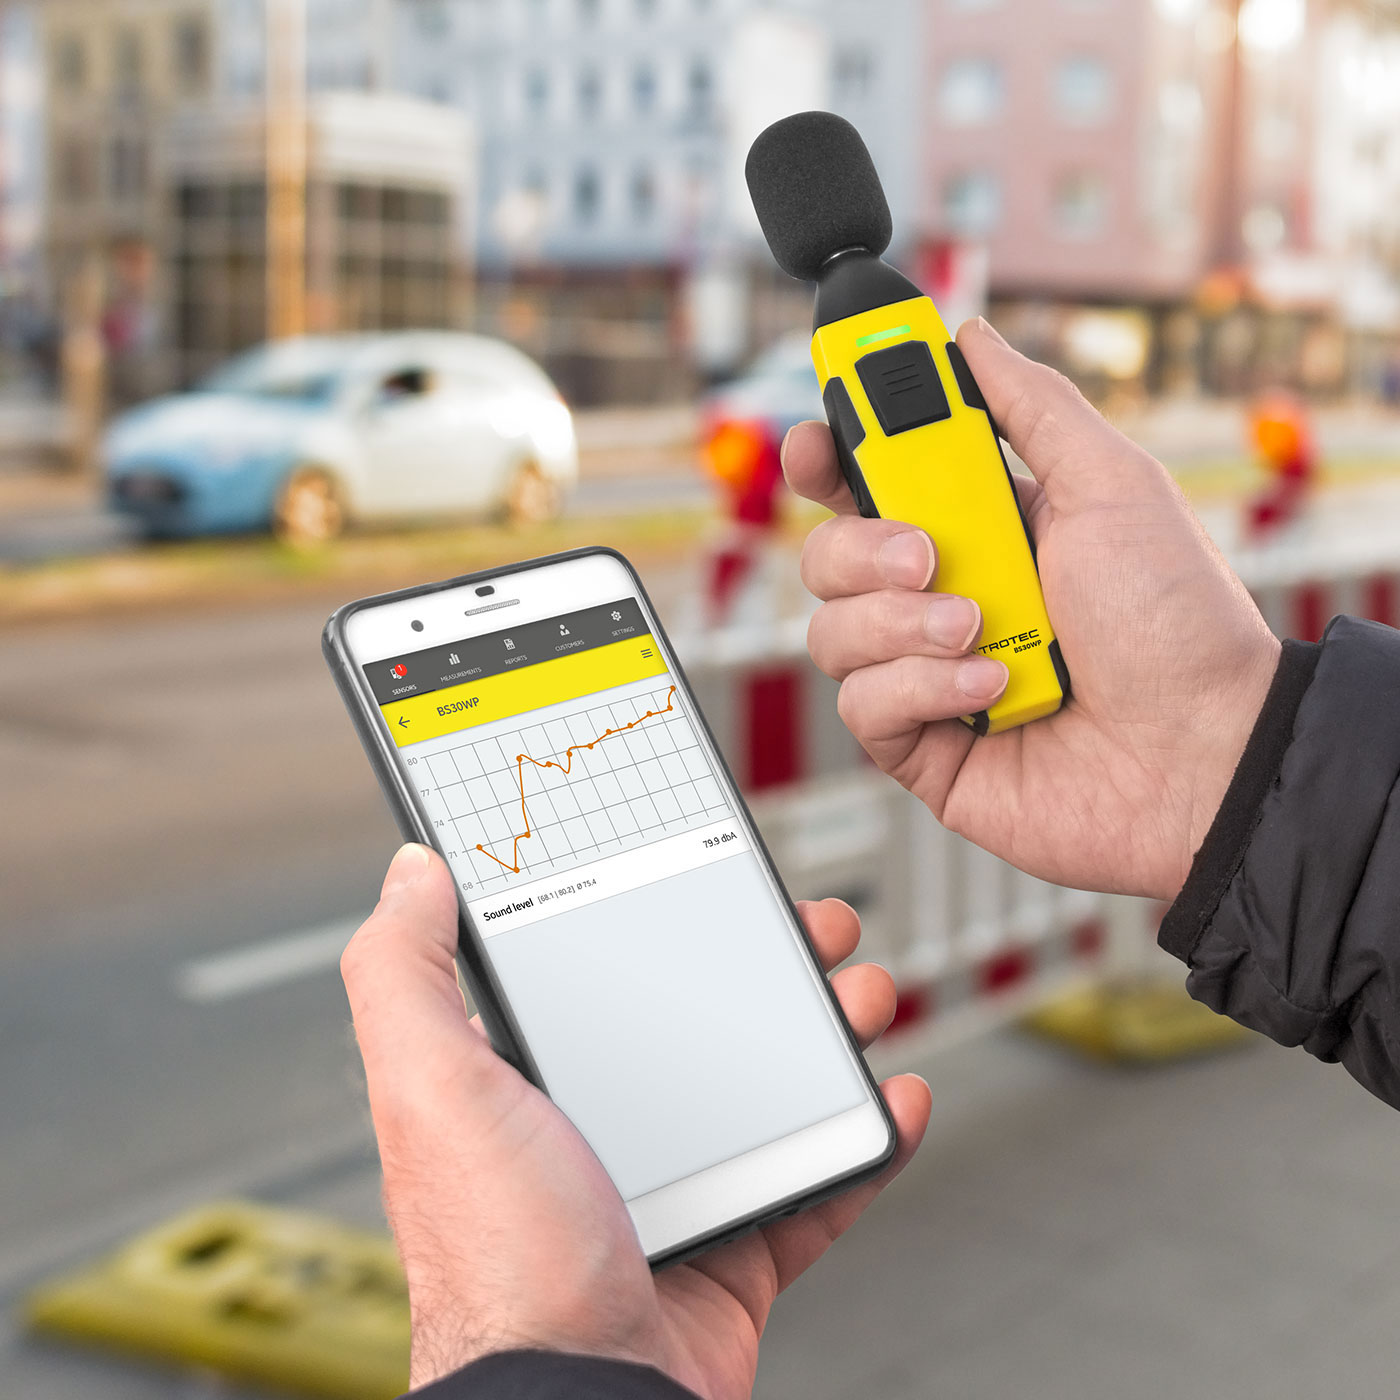 Versatile sound level measuring device as appSensor controlled via smartphone